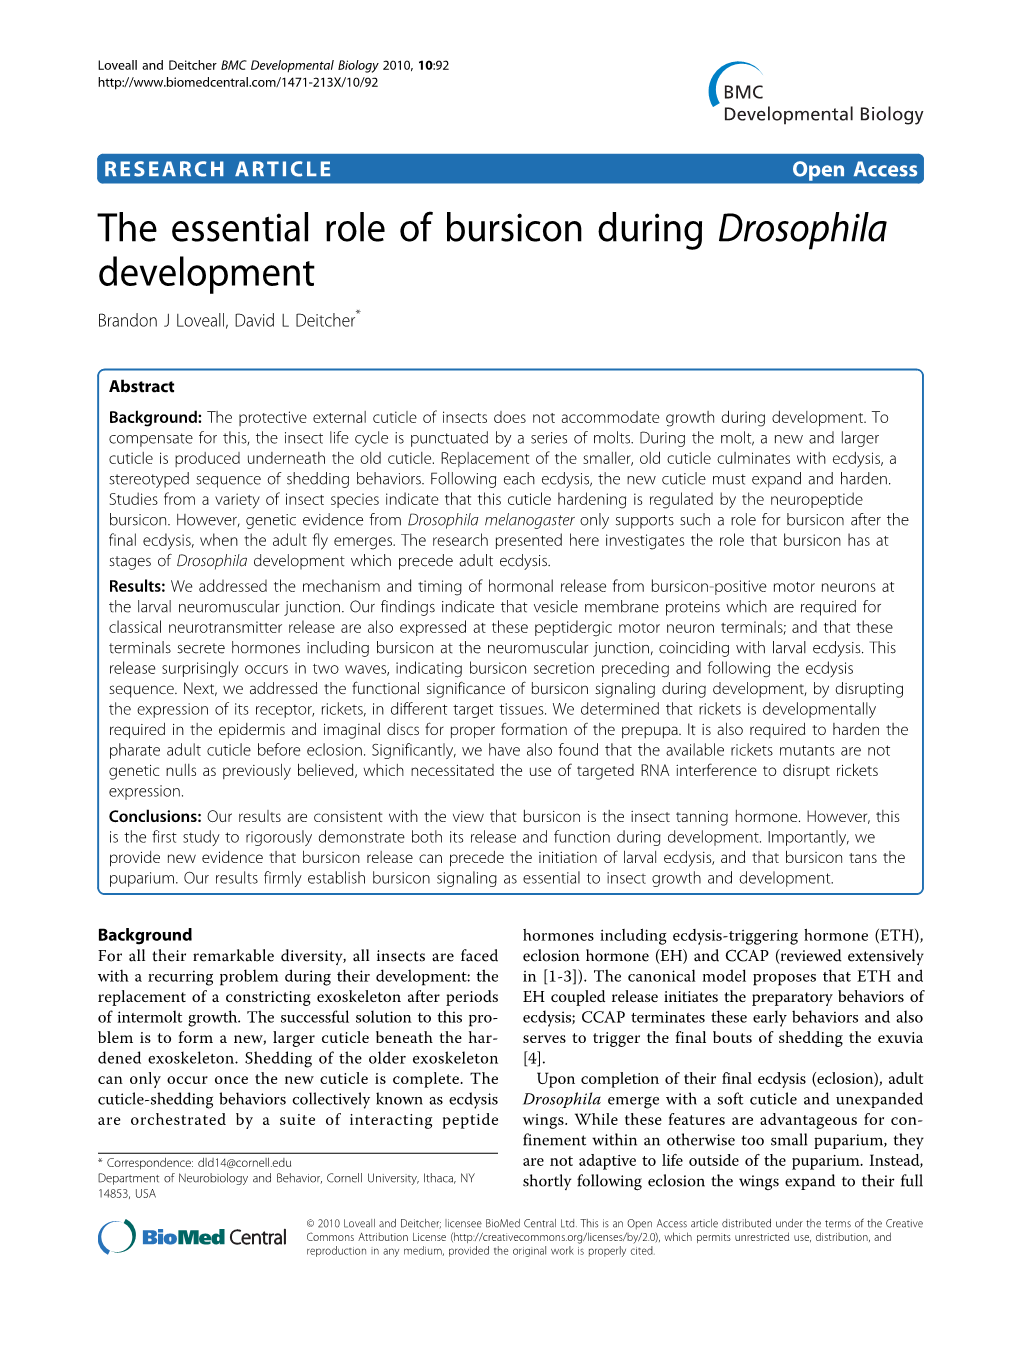 The Essential Role of Bursicon During Drosophila Development Brandon J Loveall, David L Deitcher*